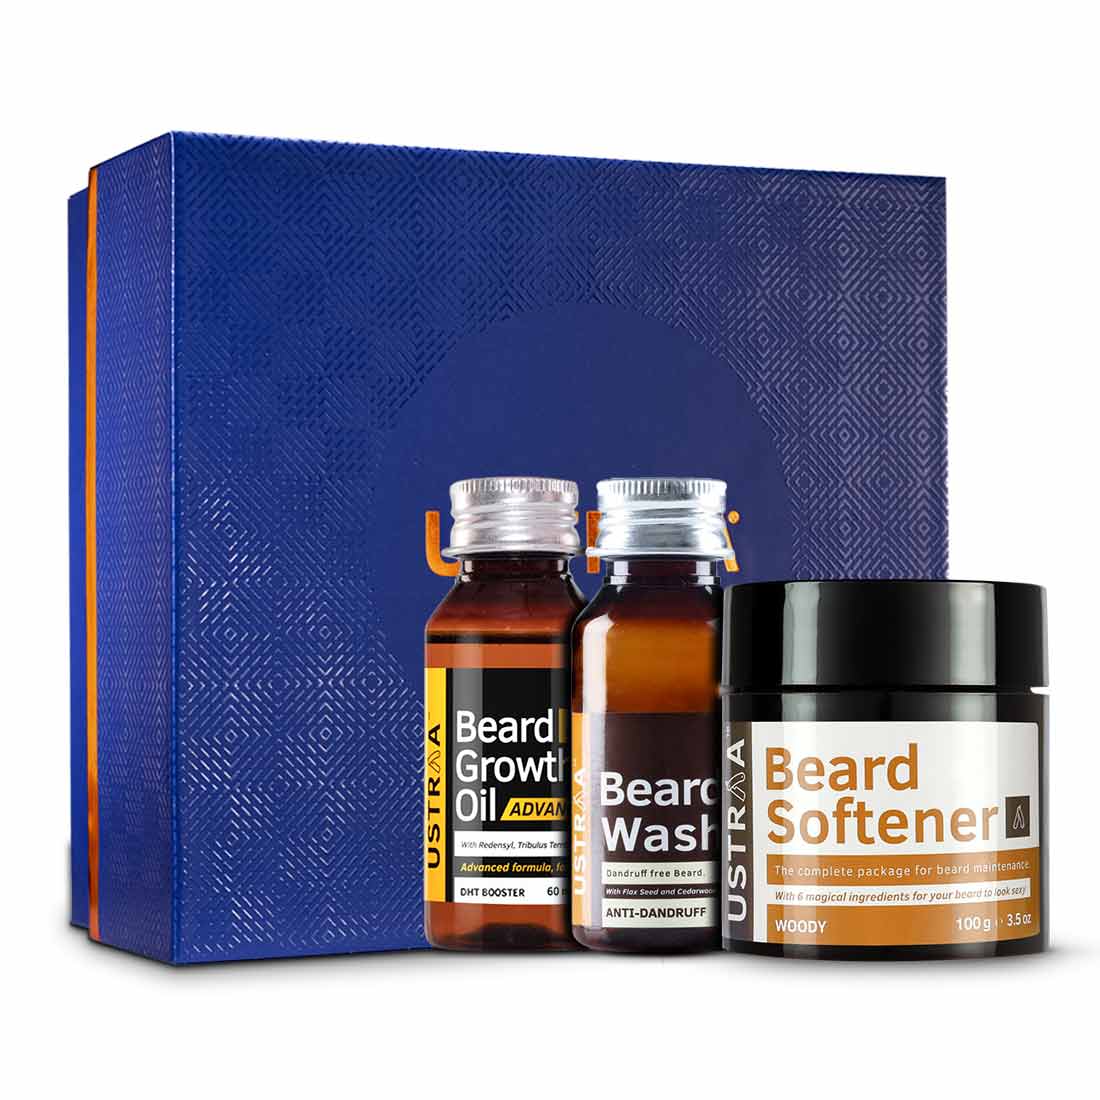 Beard Care Gift Box 1.0